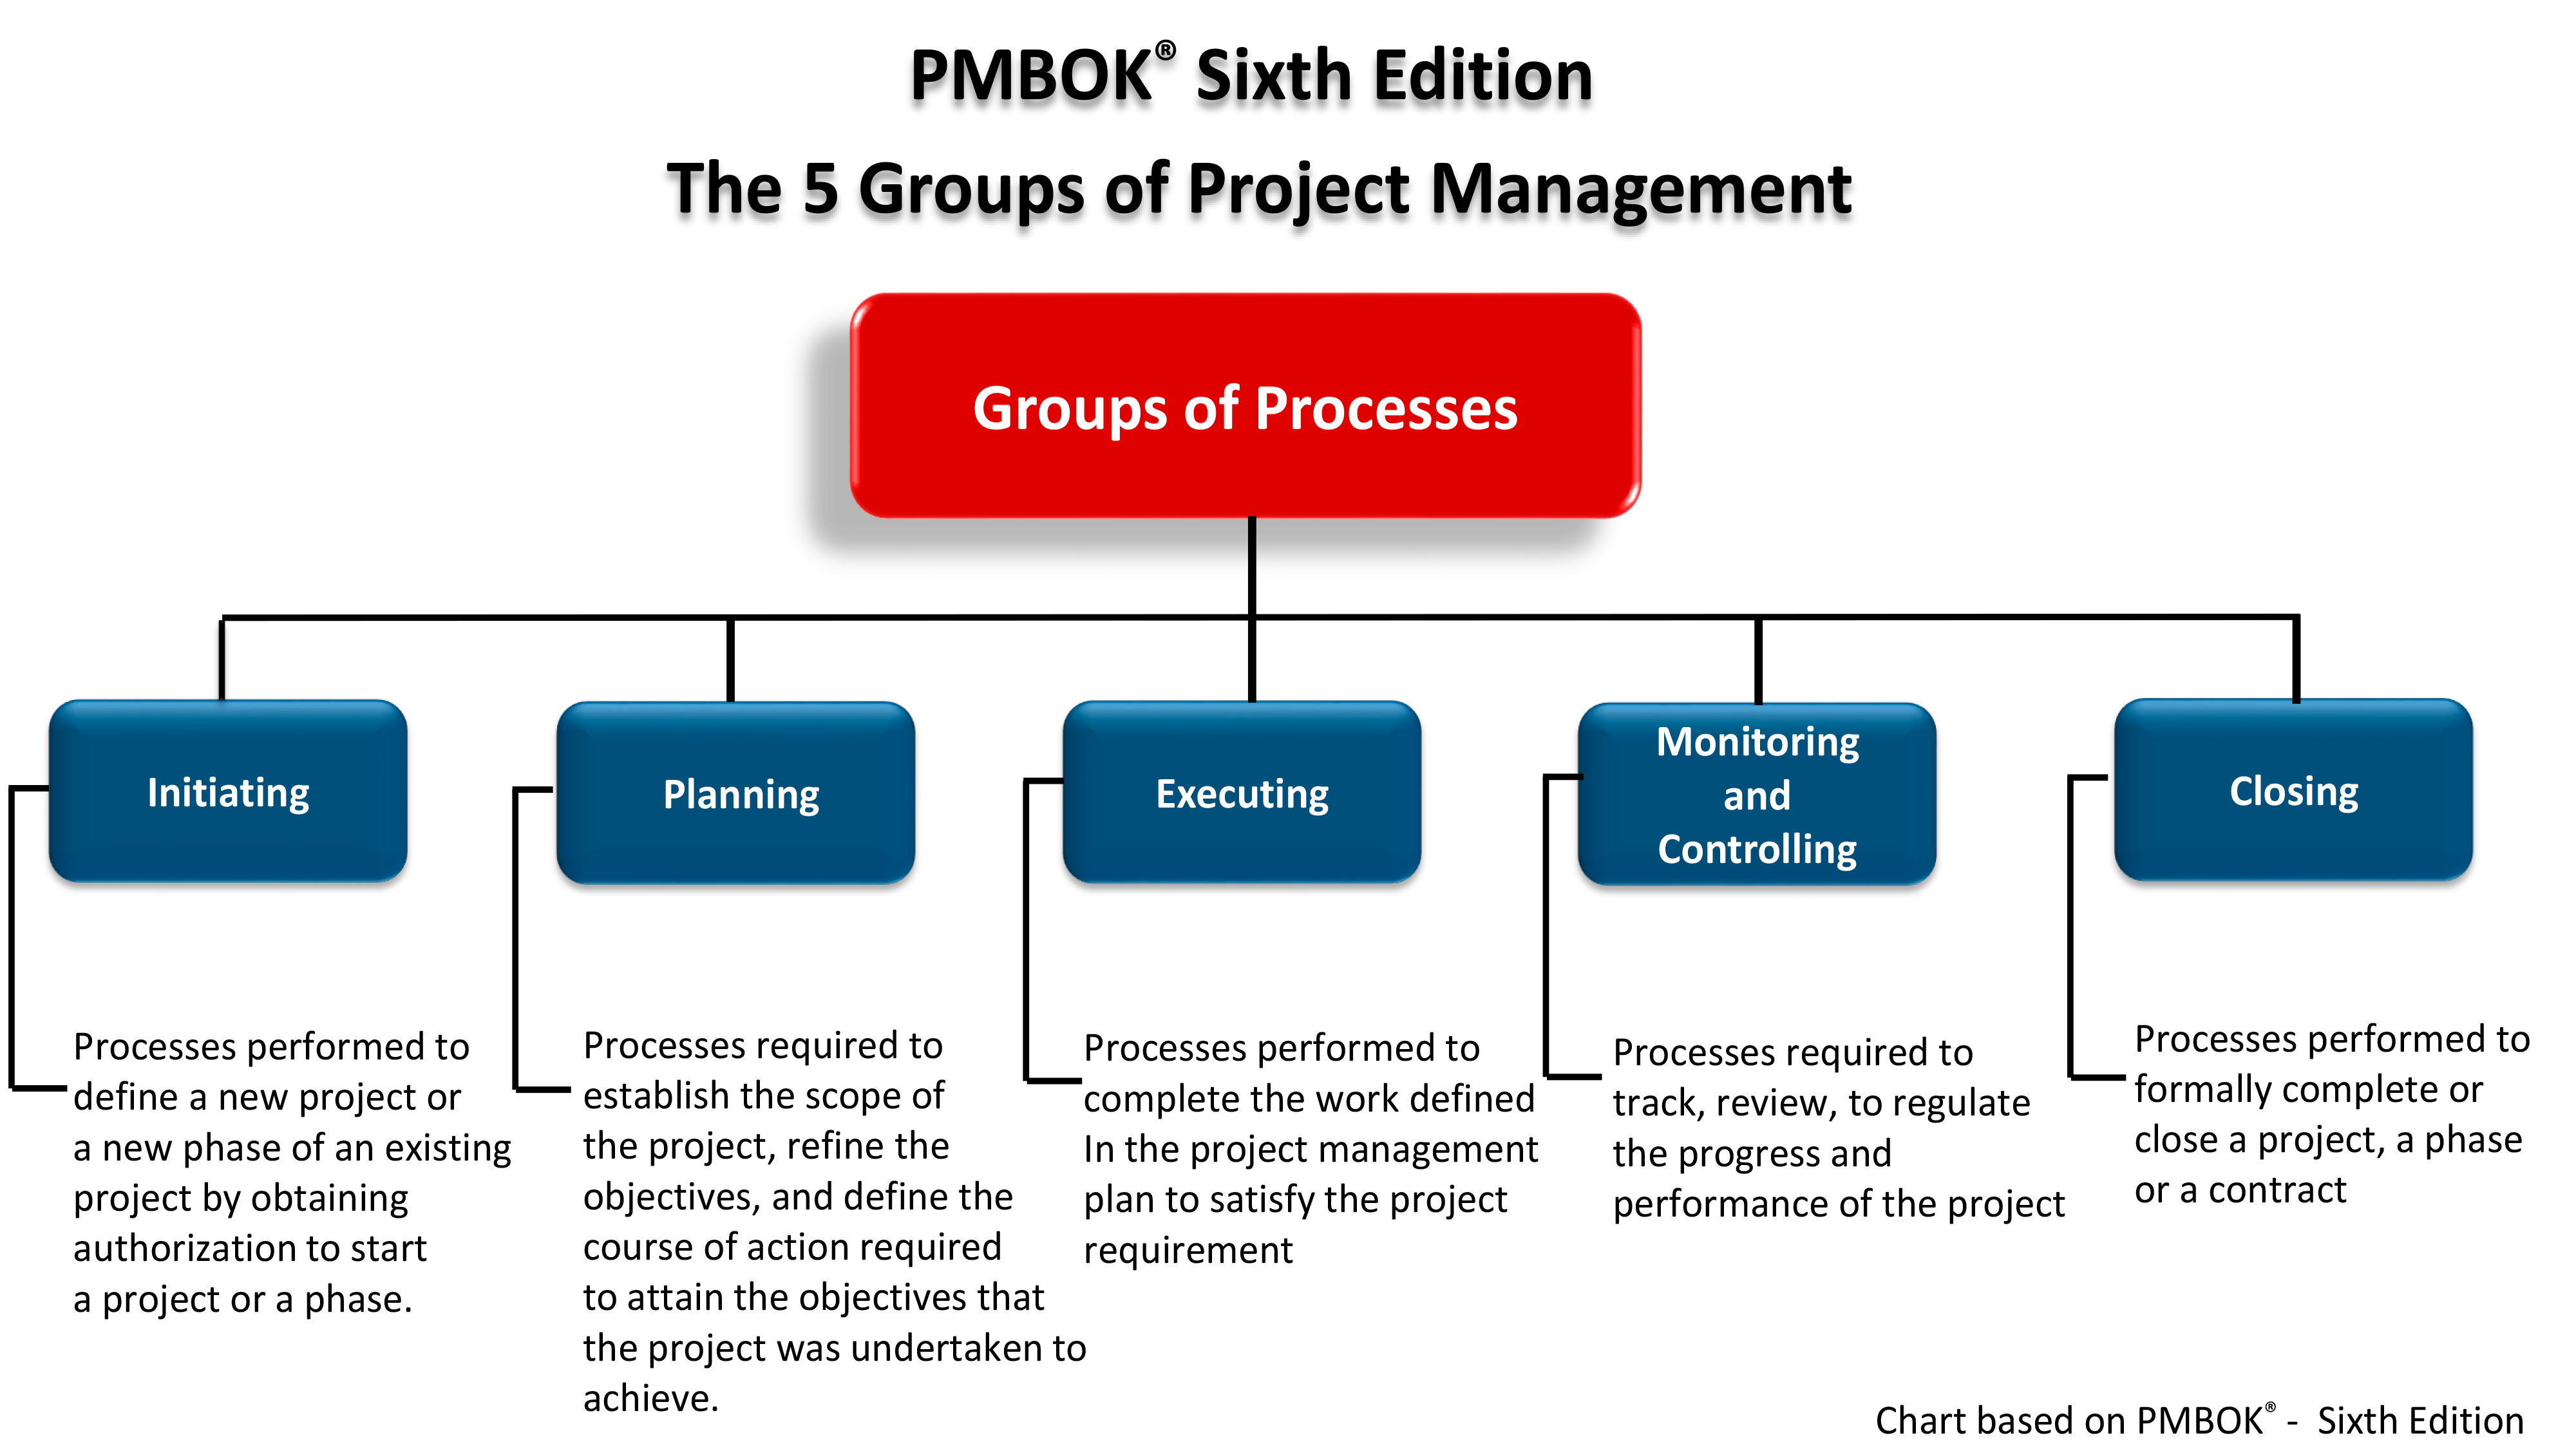 Process groups